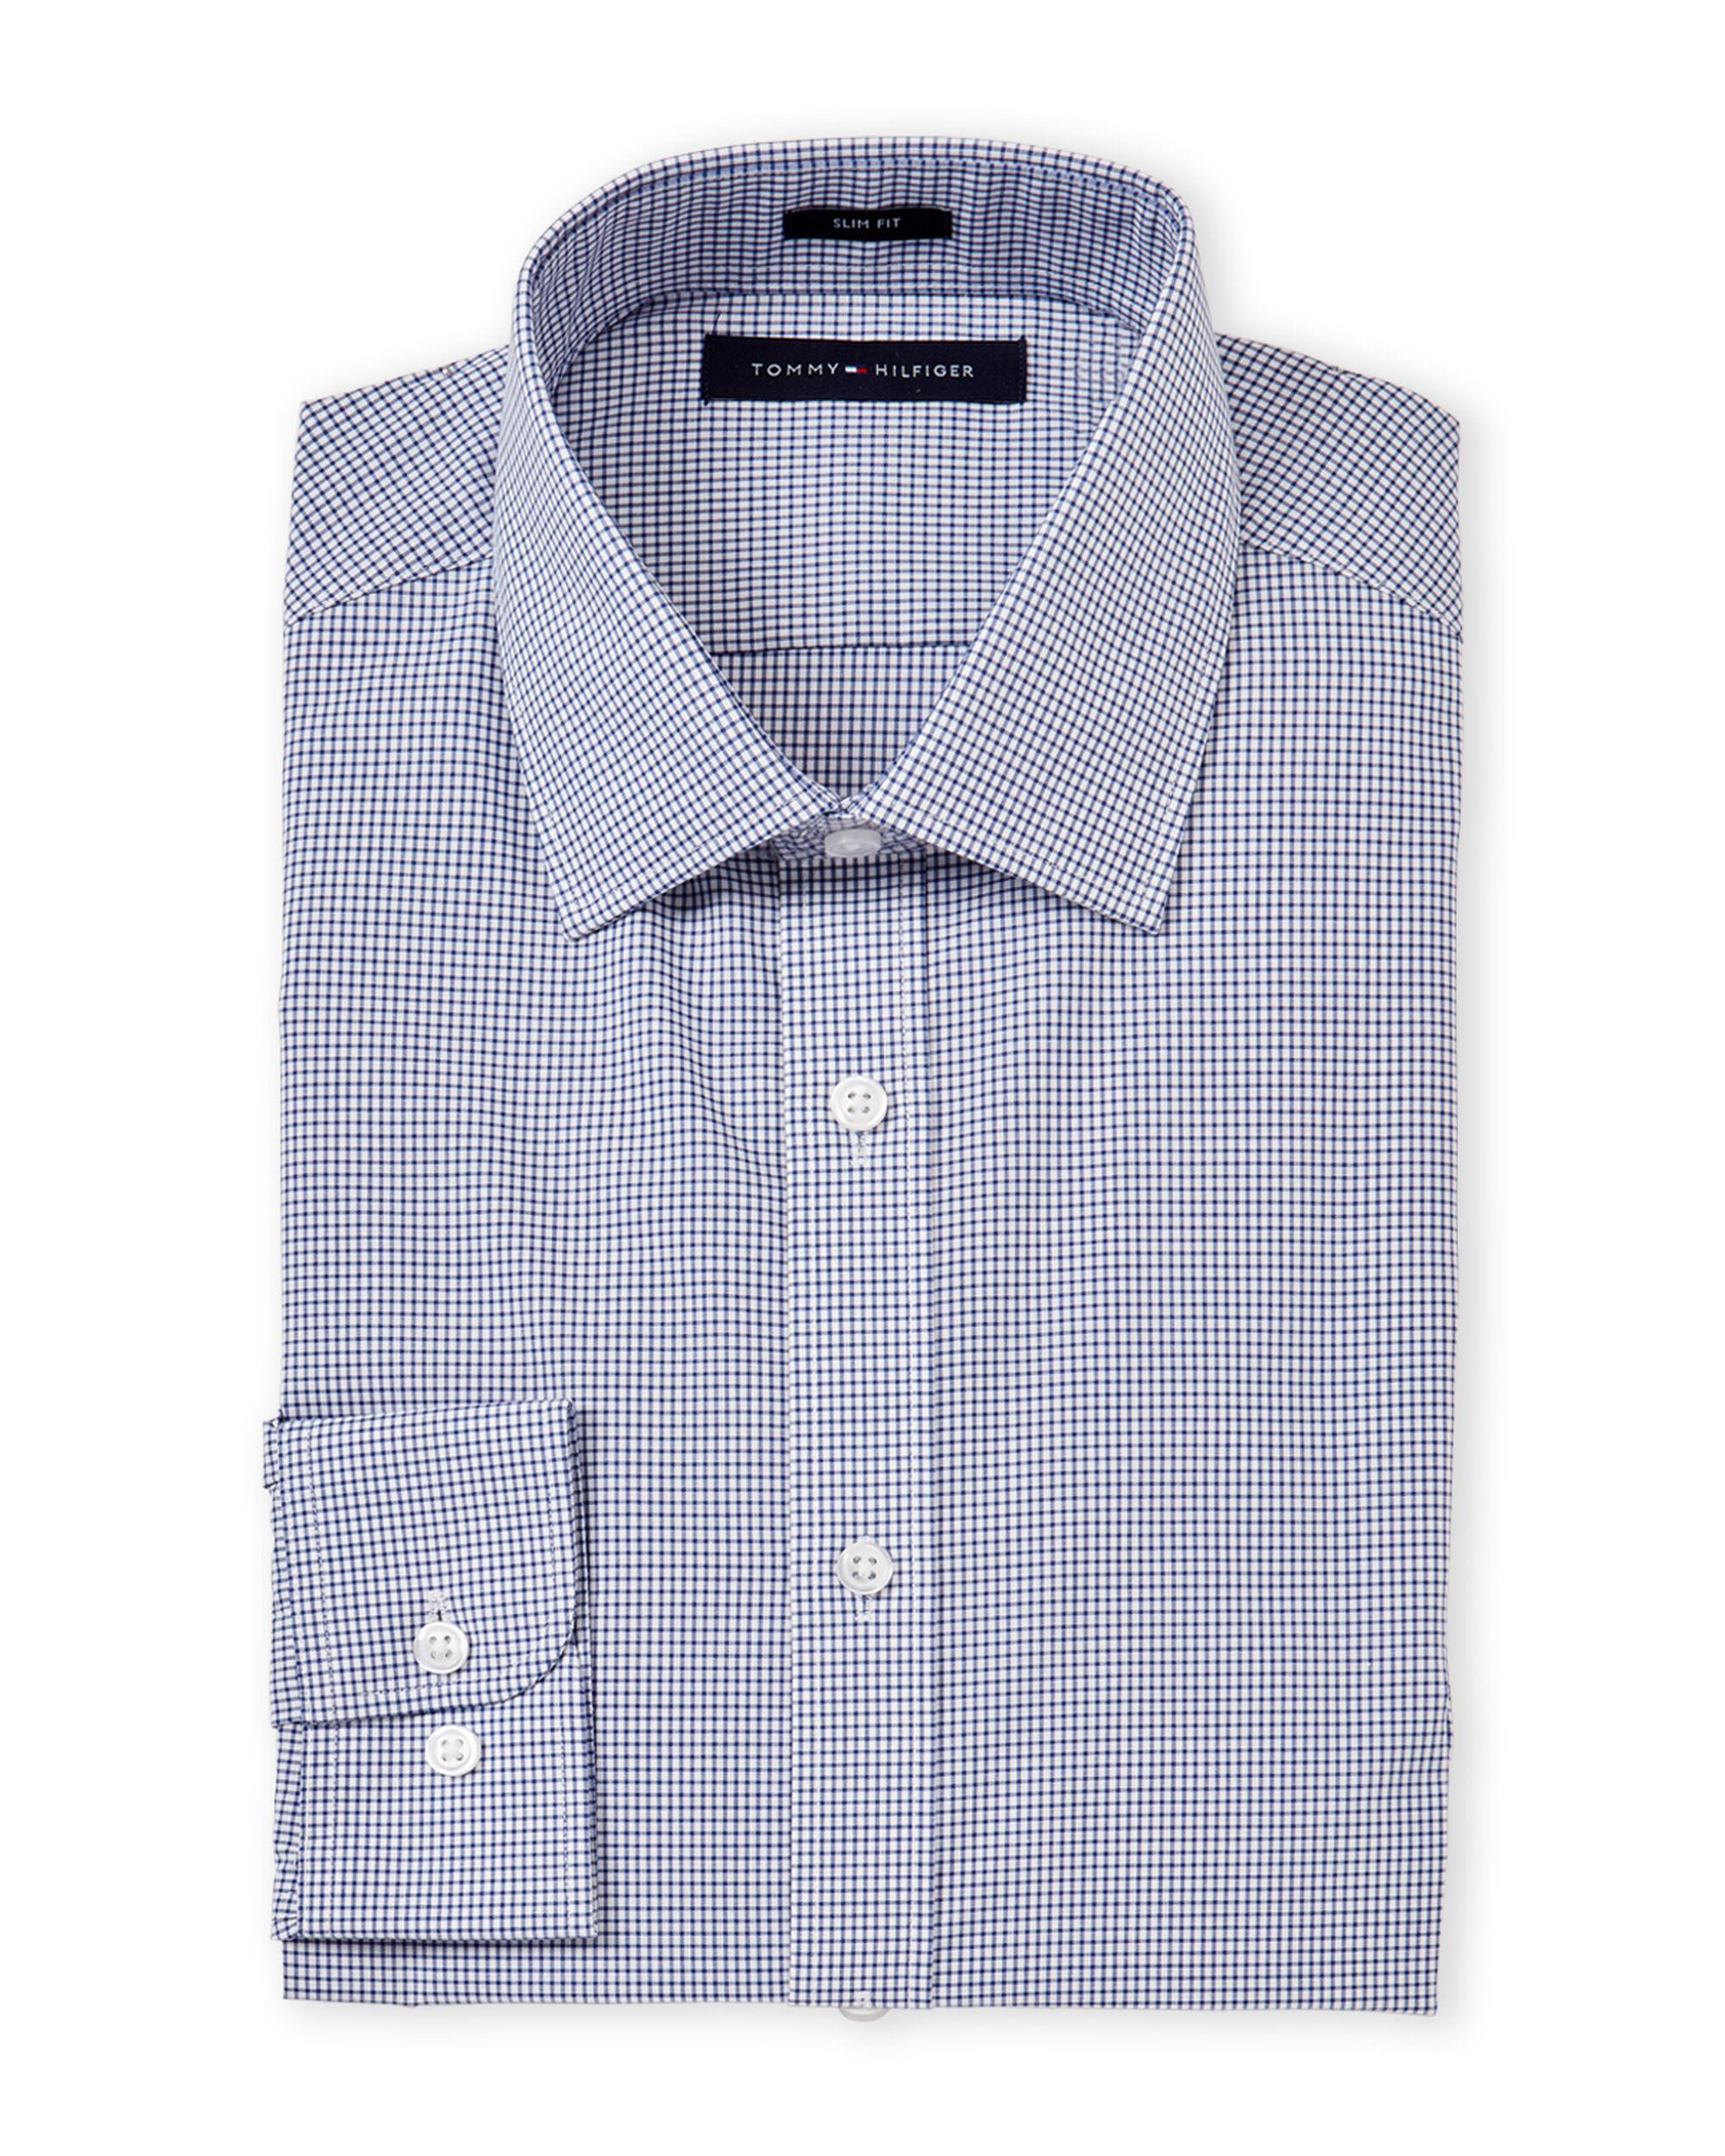 Tommy Hilfiger Slim Fit Check Pattern Dress Shirt in Blue for Men - Lyst